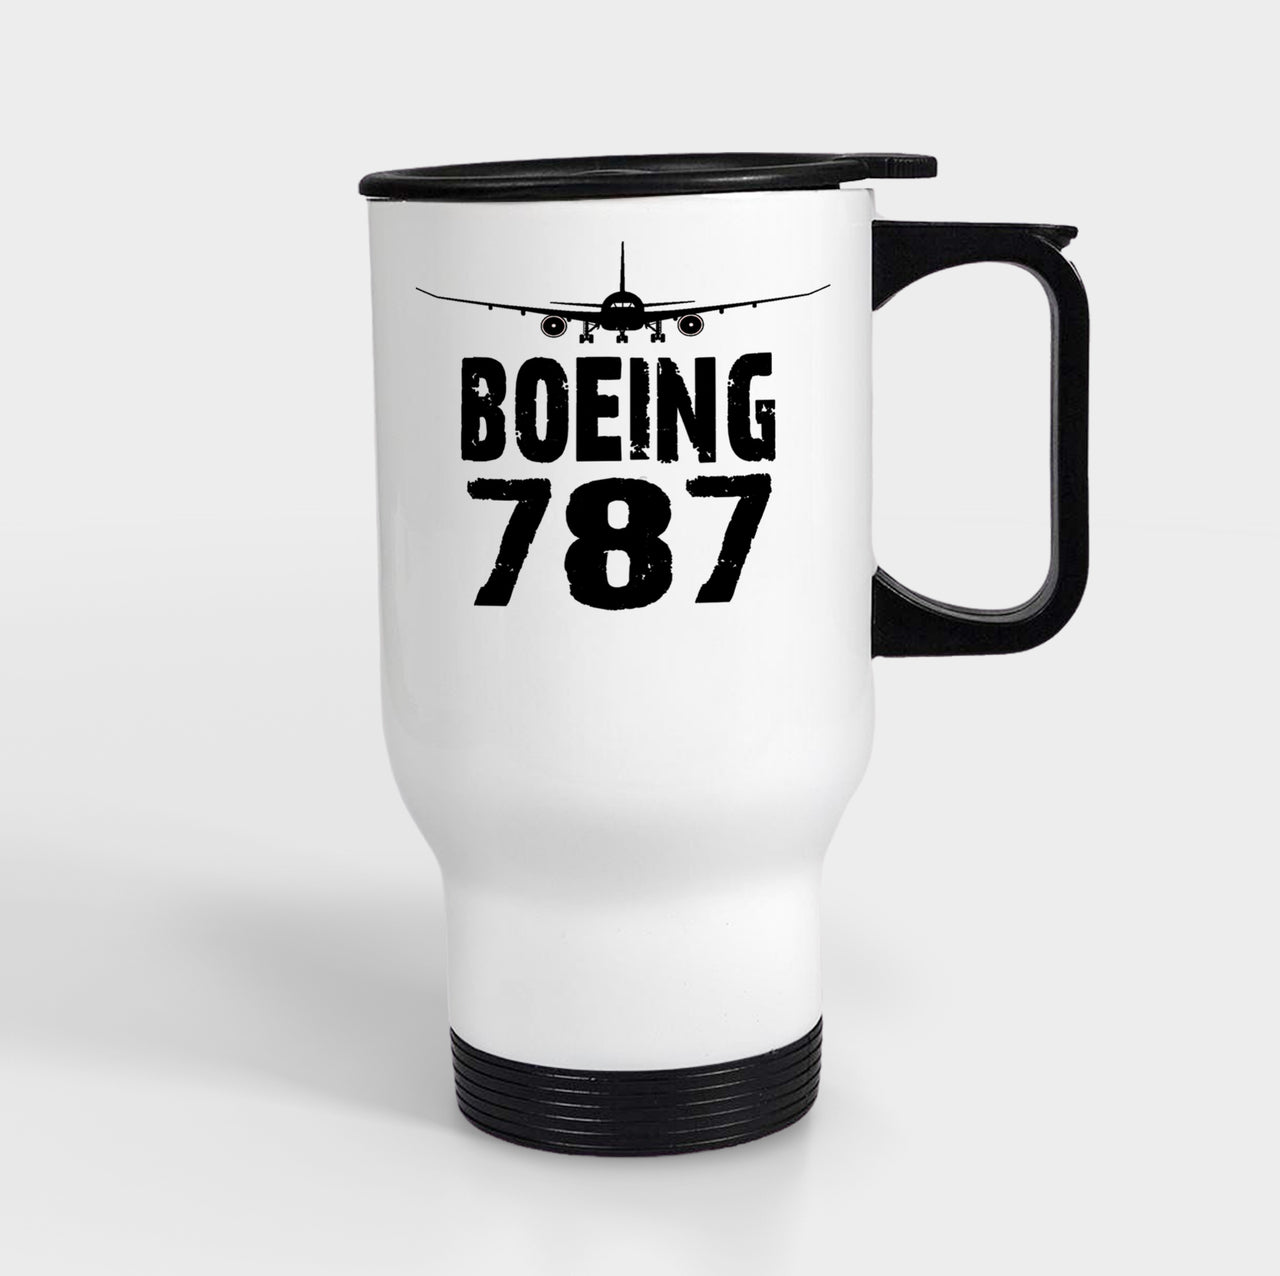 Boeing 787 & Plane Designed Travel Mugs (With Holder)